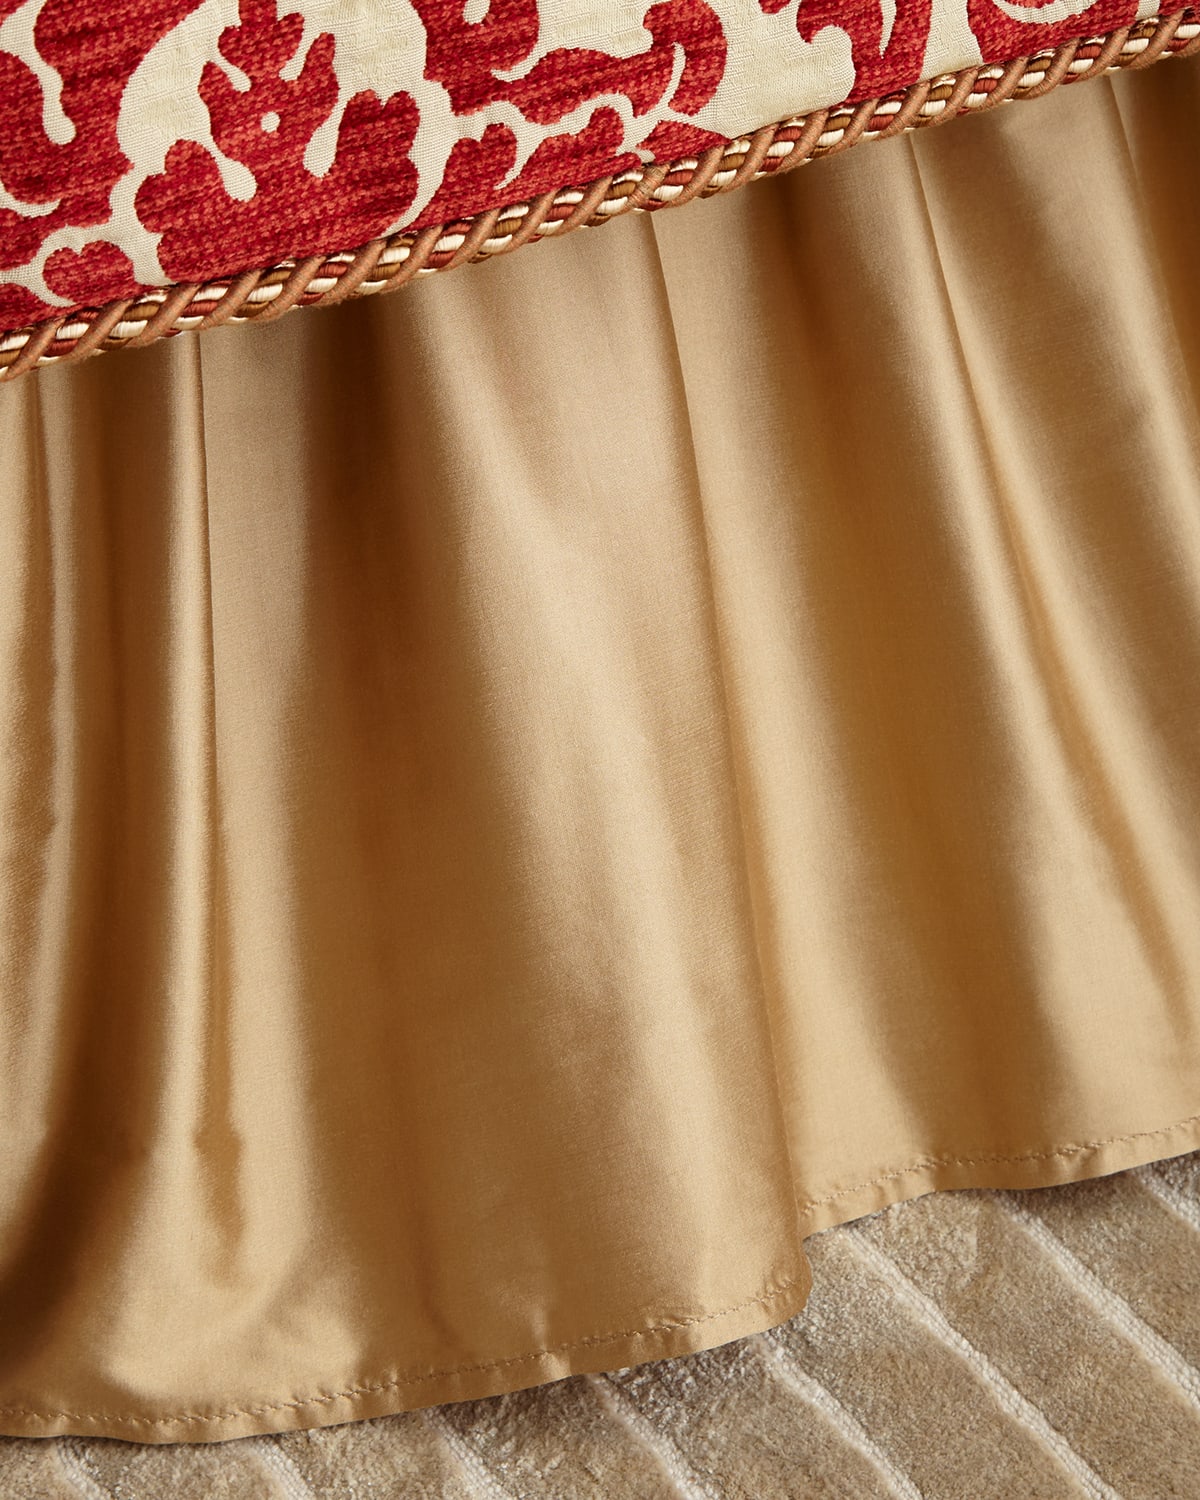 Image Austin Horn Collection Arabesque Queen Dust Skirt